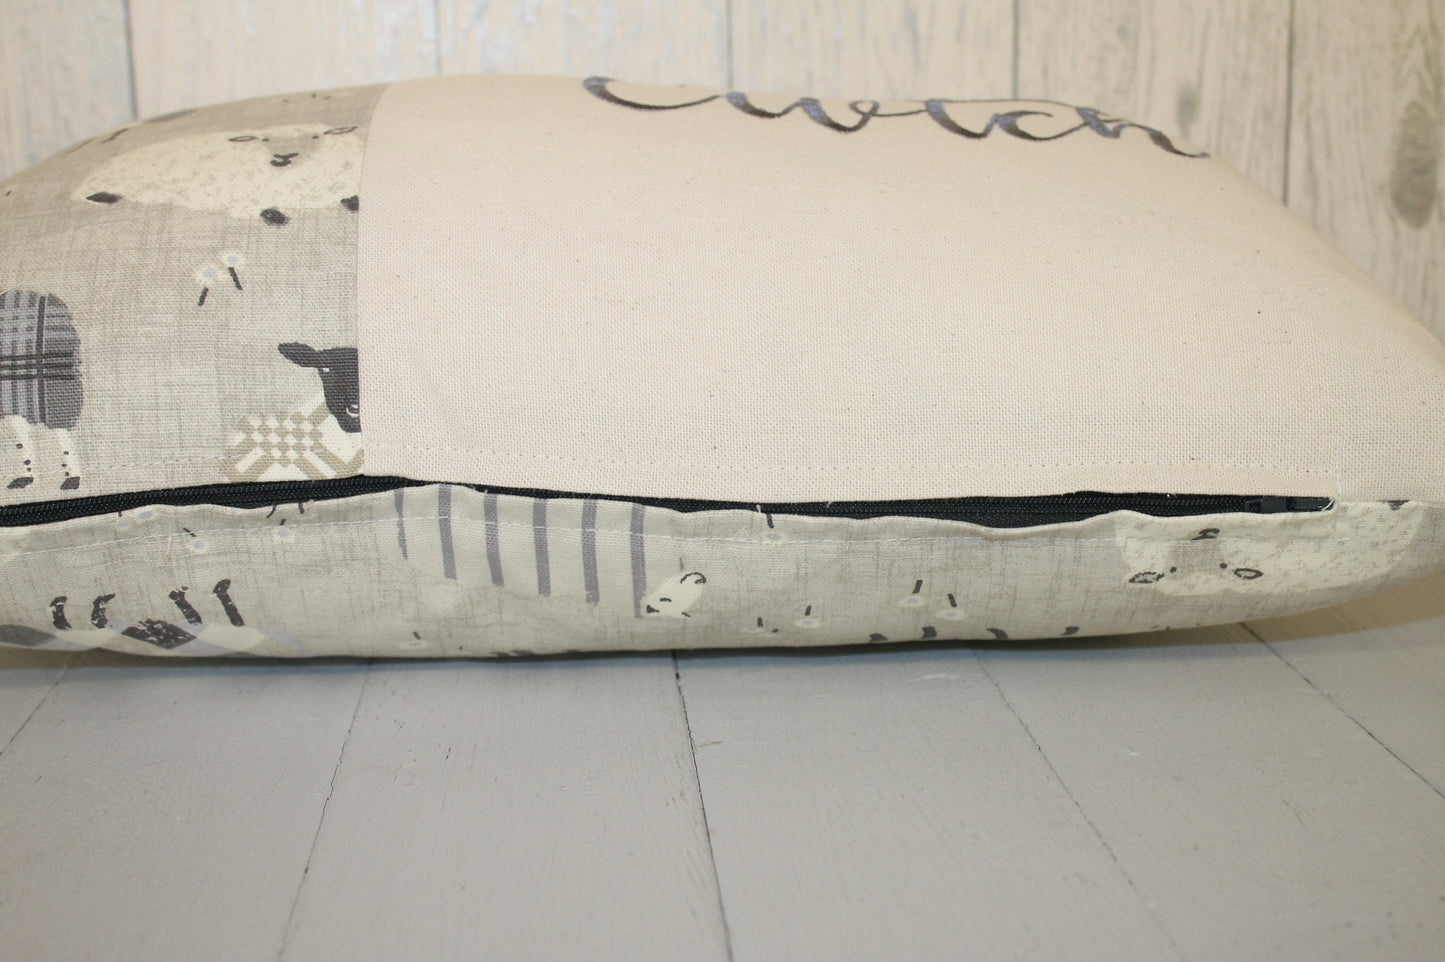 Cwtch Cushion-Personalised Cushion- Quote Cushion- Grey Sheep Wearing Jumpers & Cream long cushion.